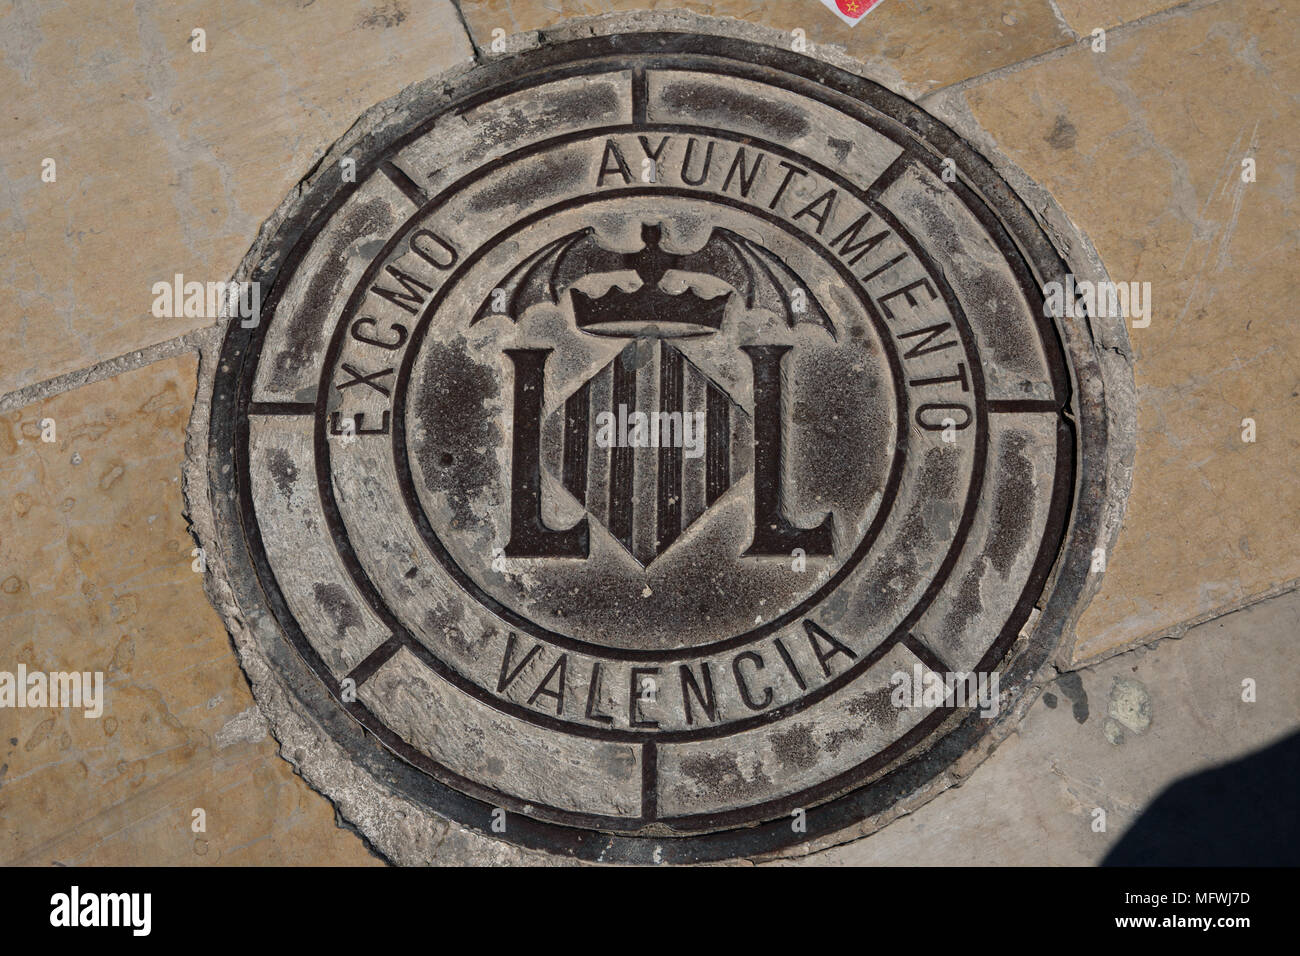 Manhole cover in Valencia Spain Stock Photo